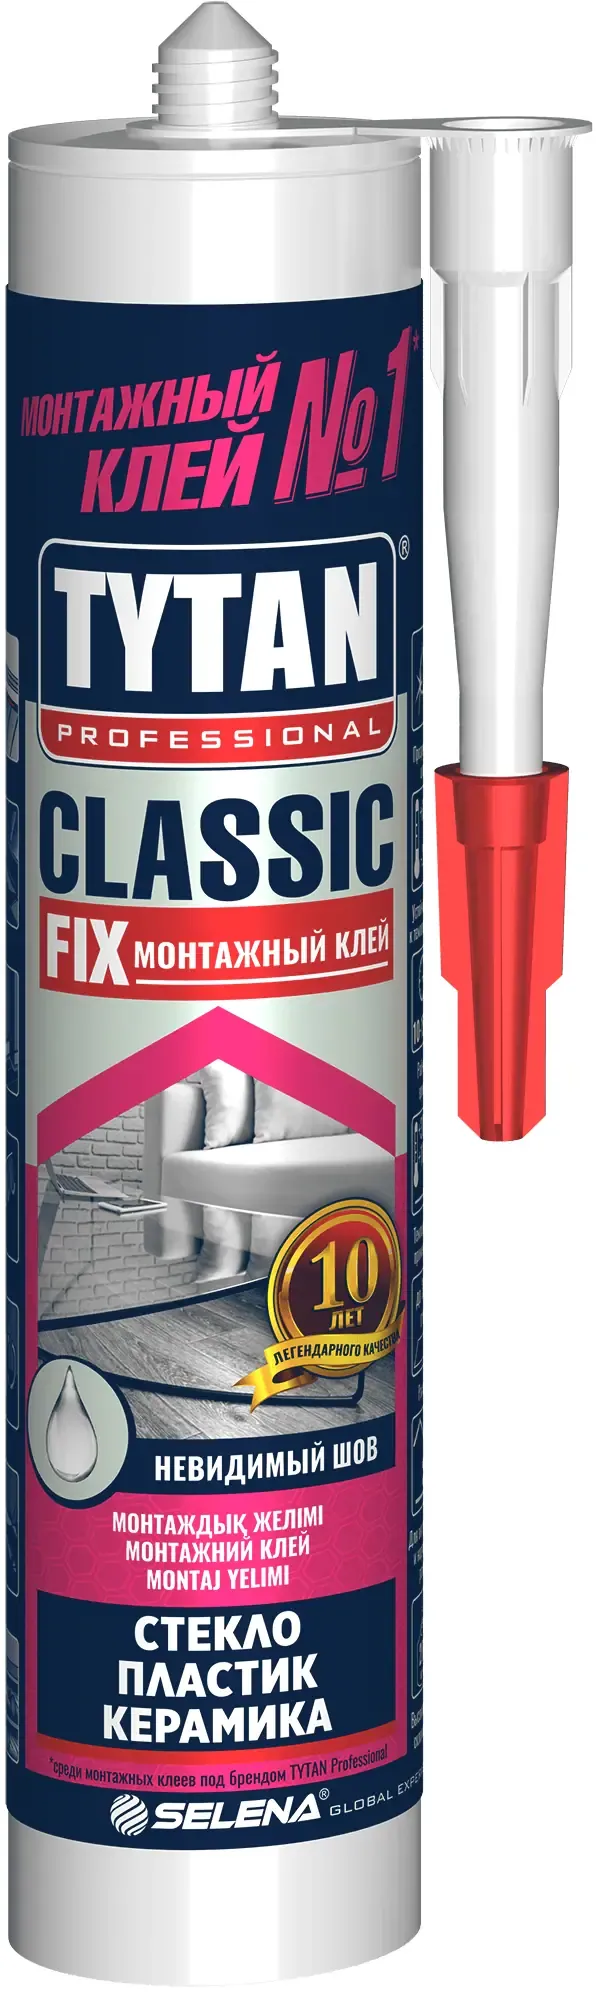 Монтажный клей Титан Professional Classic Fix Стекло Пластик Керамика 310 мл